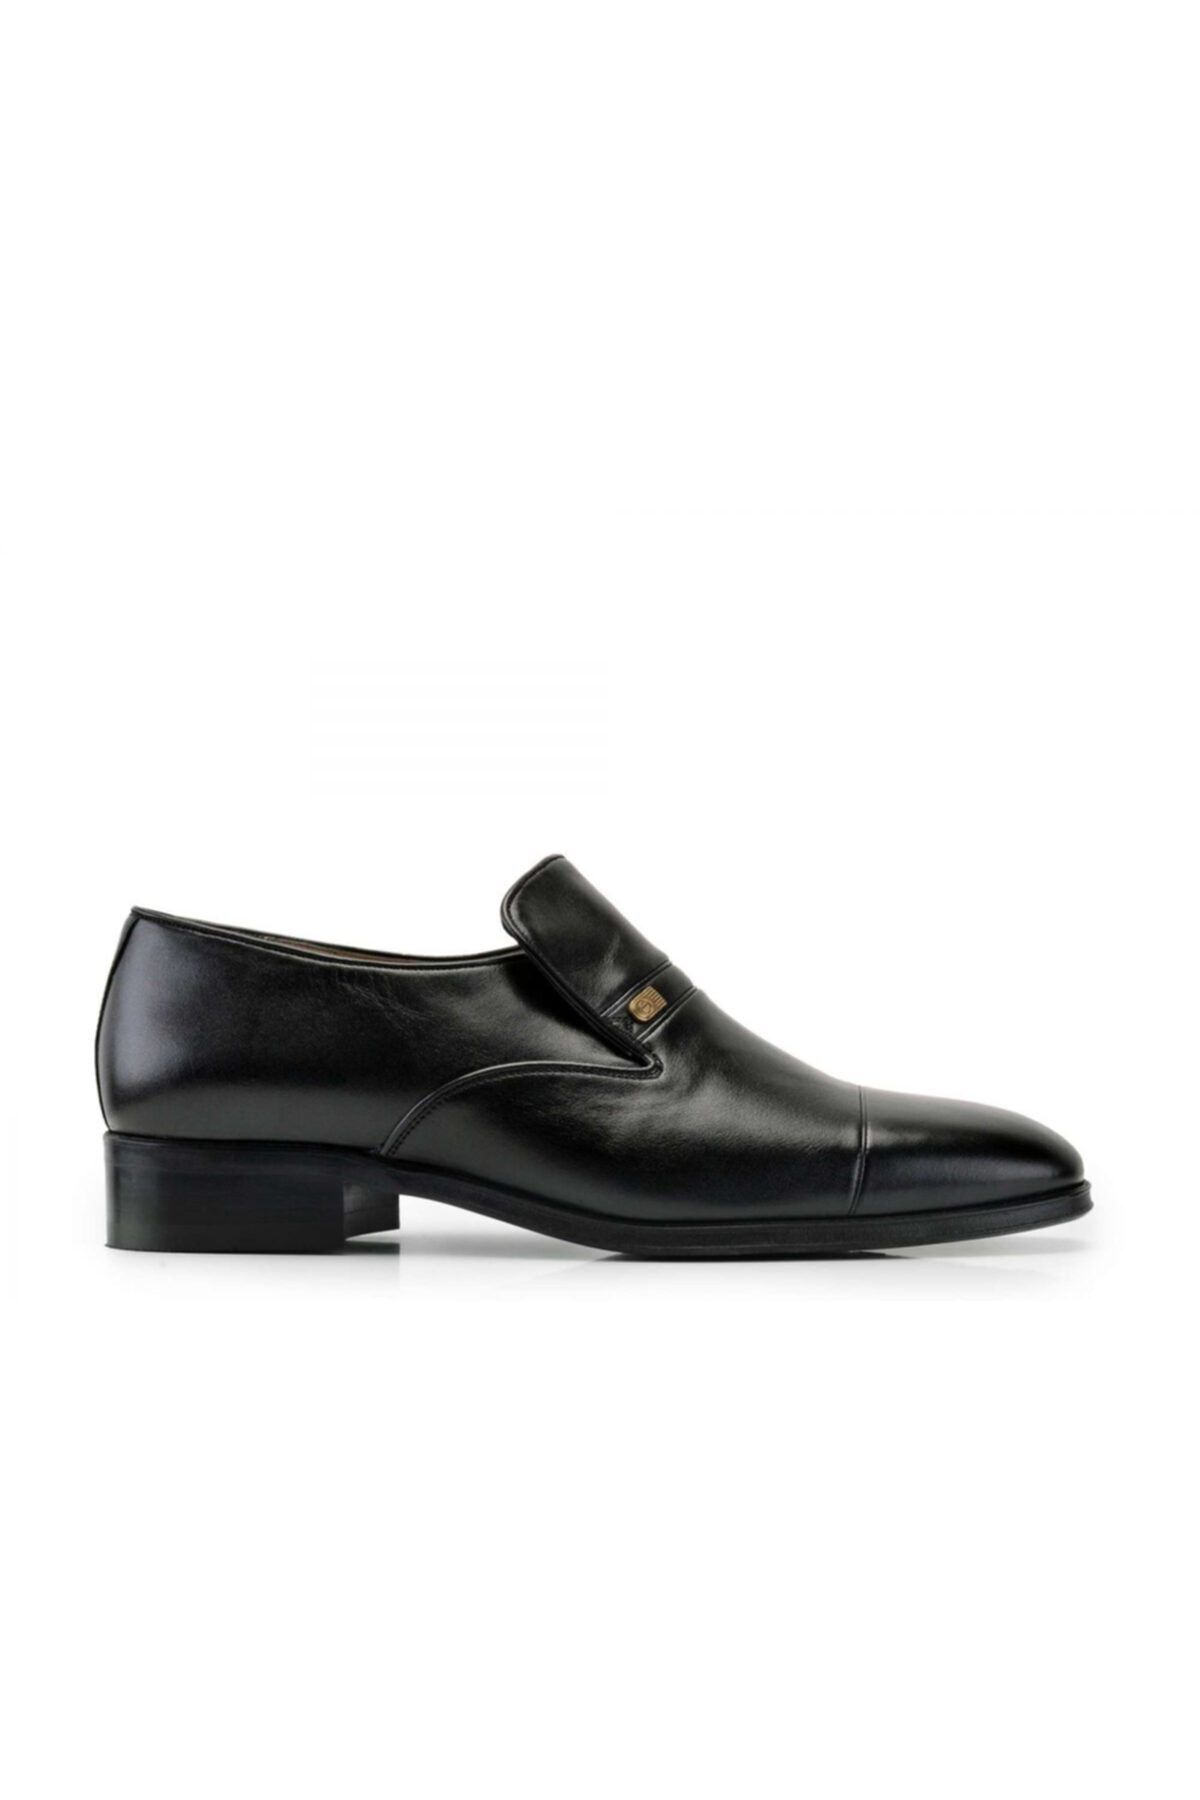 Nevzat Onay Hakiki Deri Siyah Klasik Loafer Erkek Ayakkabı -10577-